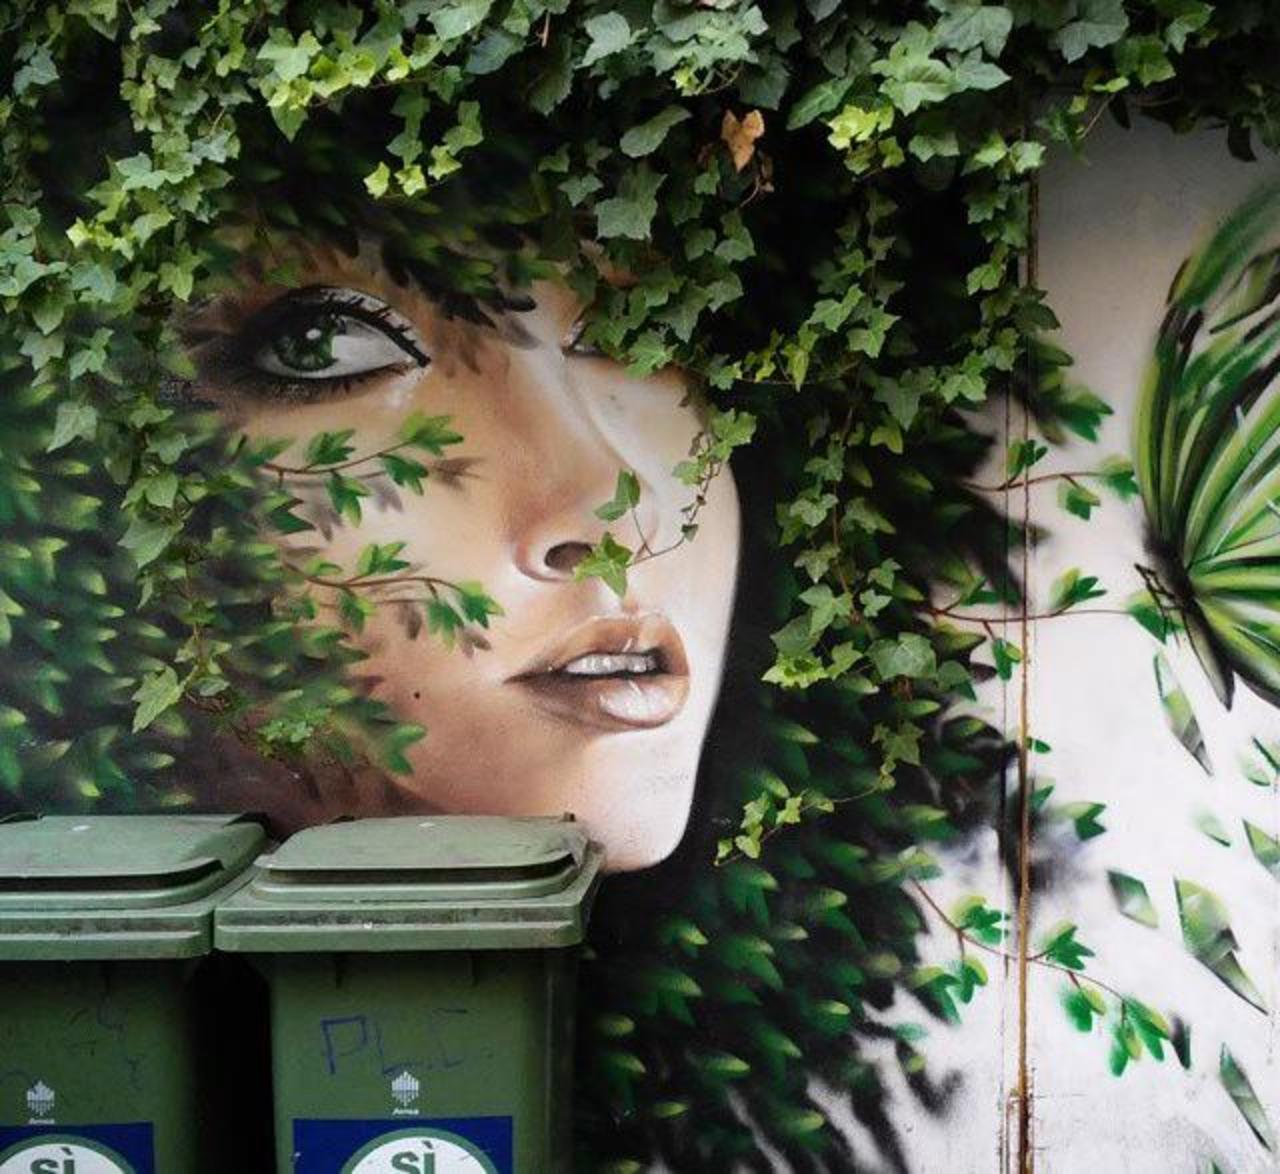 When Street Art meets nature by Dasxa in Isola, Millan 

#art #arte #graffiti #streetart http://t.co/GmTajn8bop